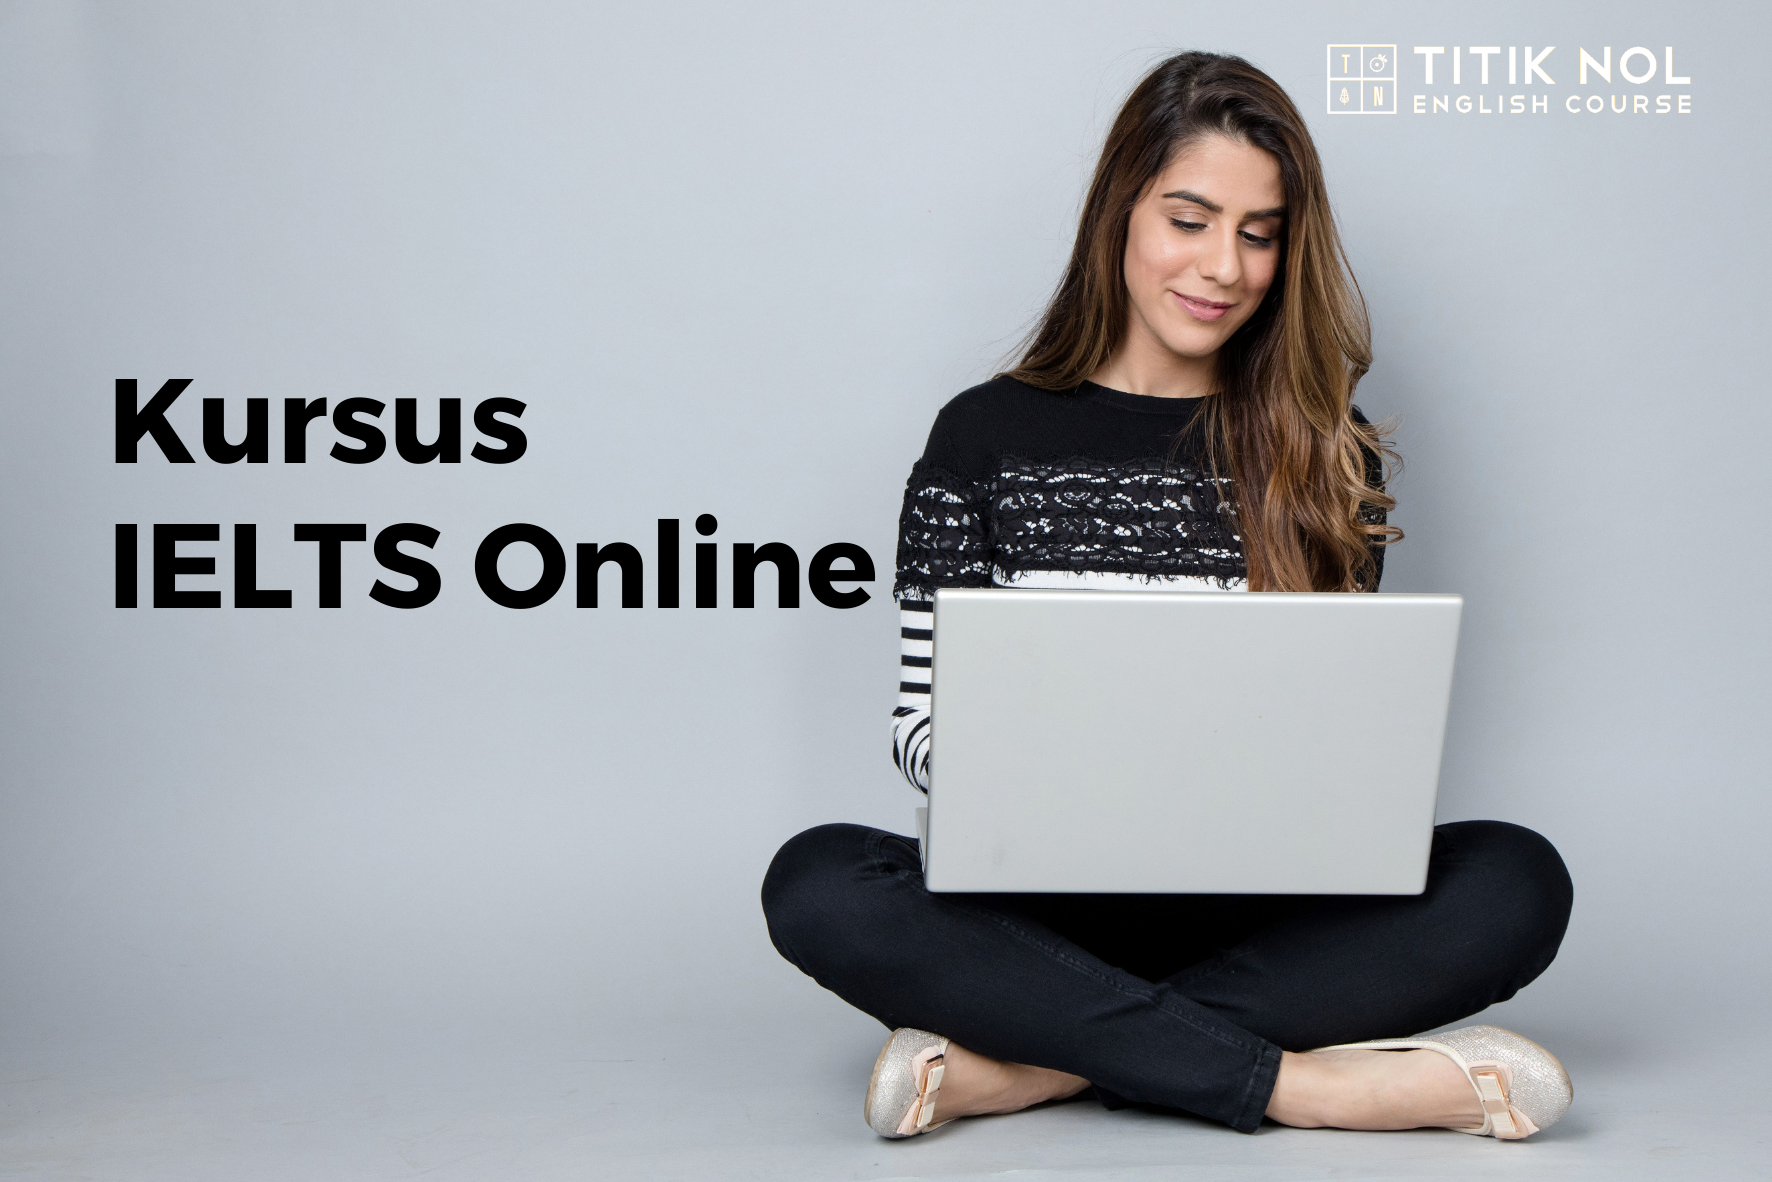 Kursus IELTS Online